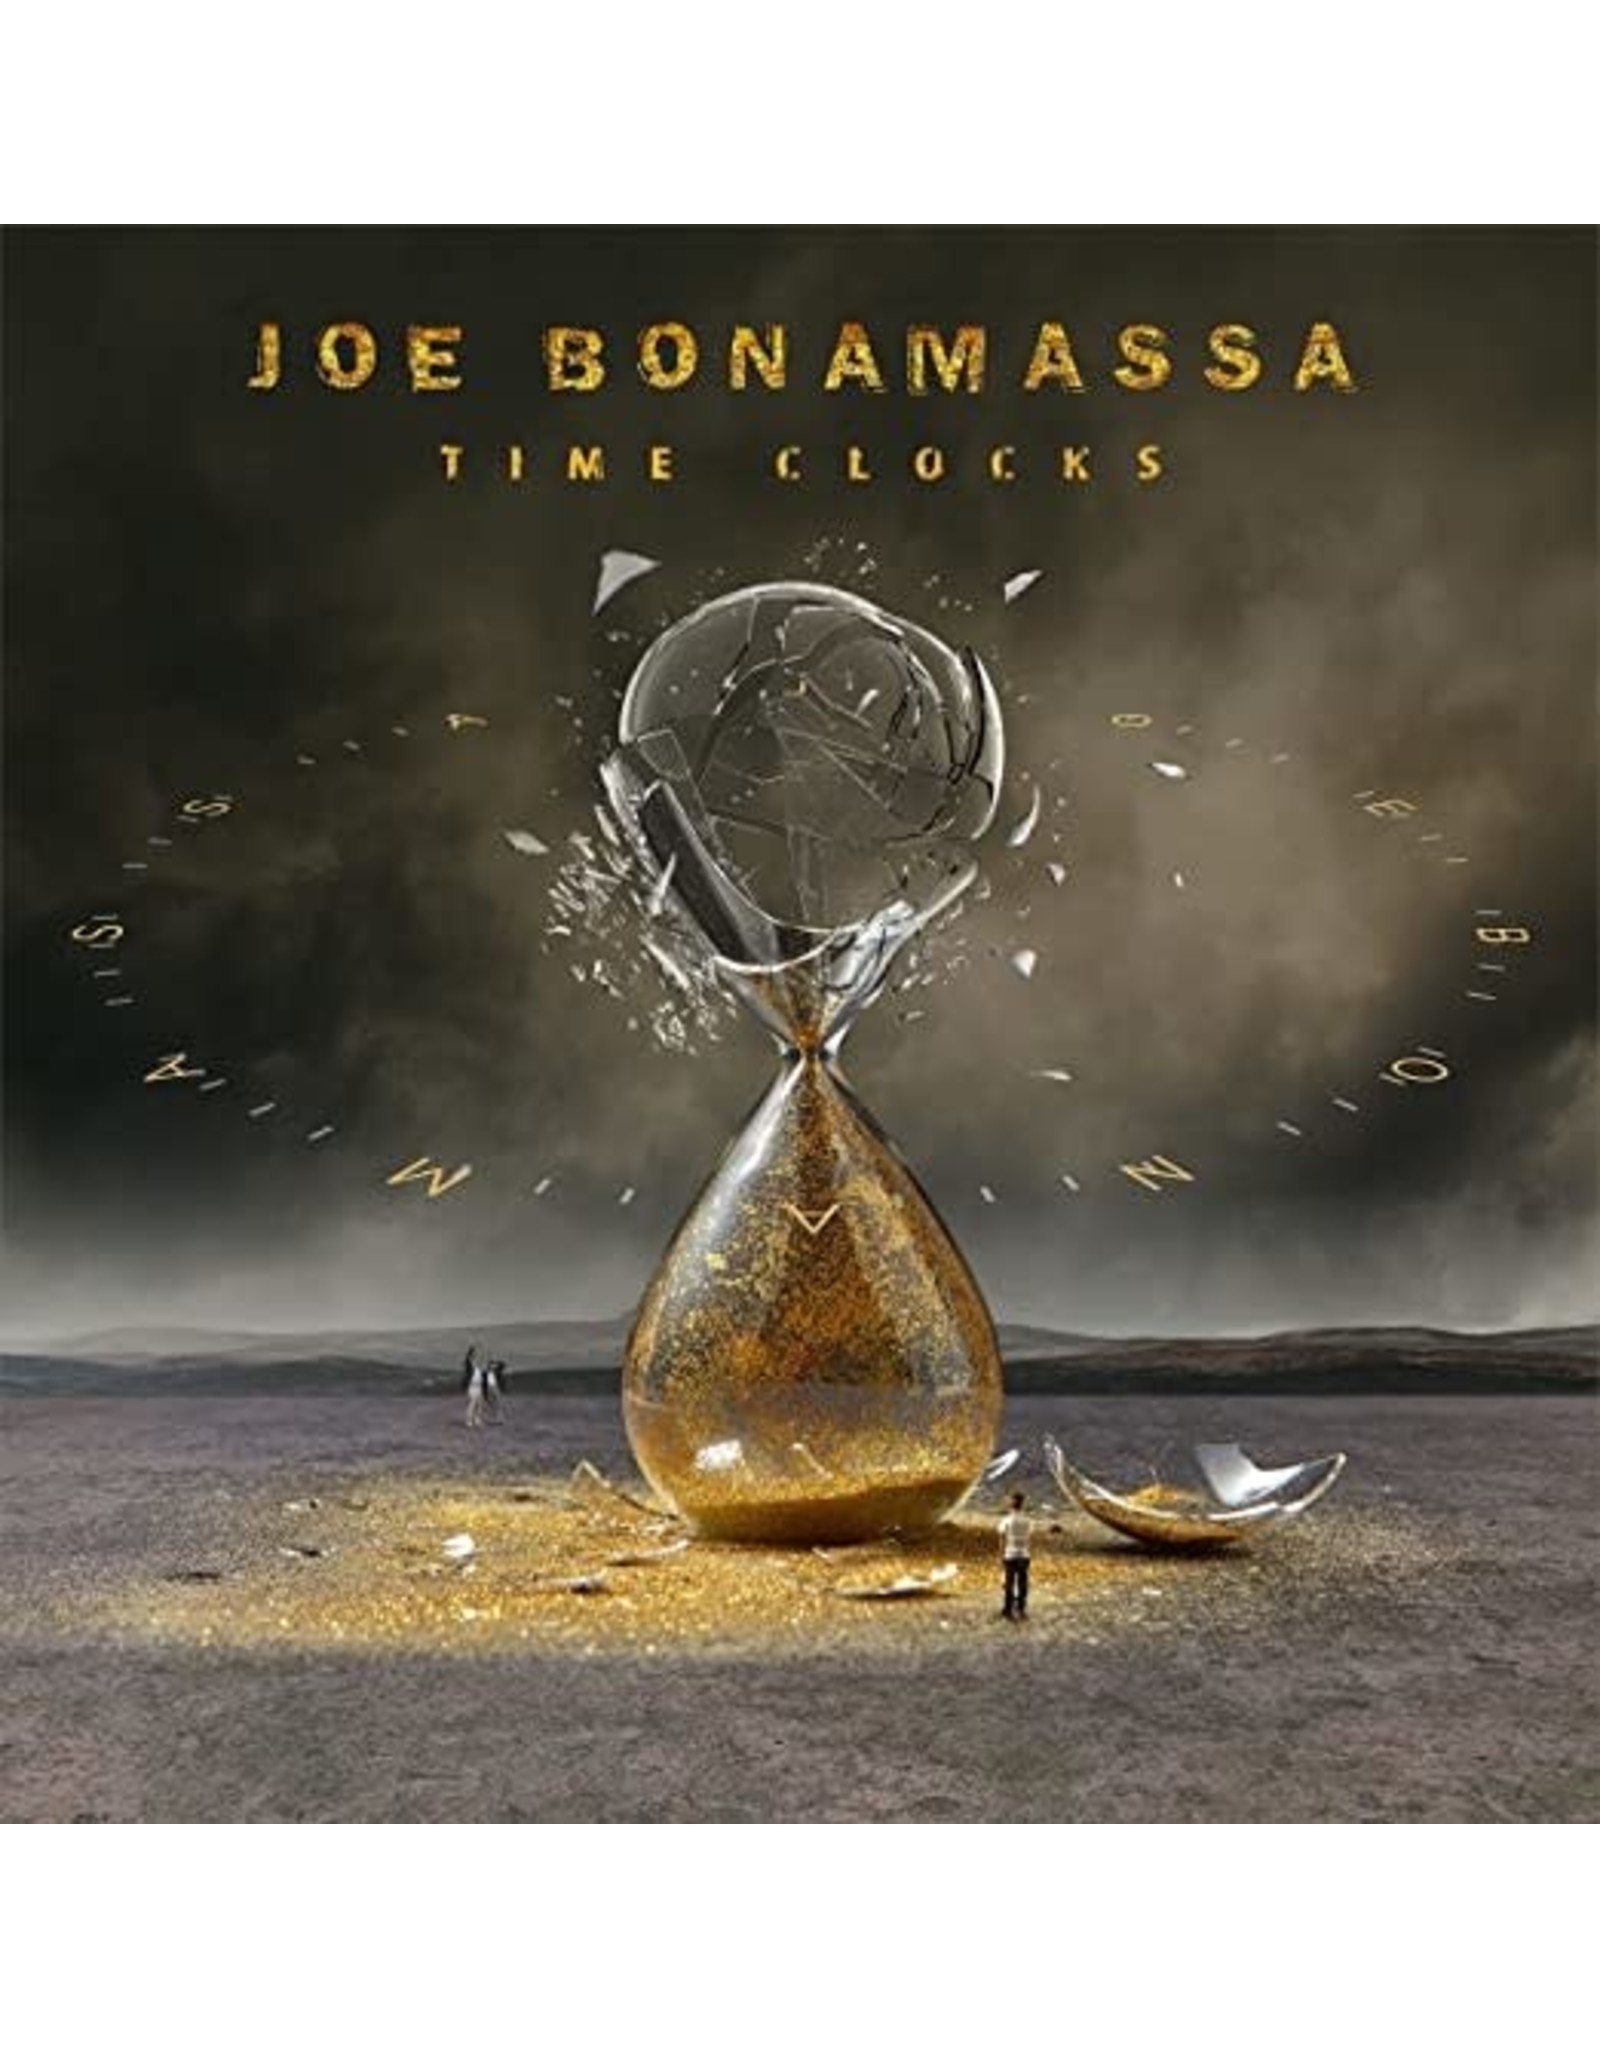 Bonamassa, Joe - Time Clocks 2LP (Transparent gold/20-page art booklet)